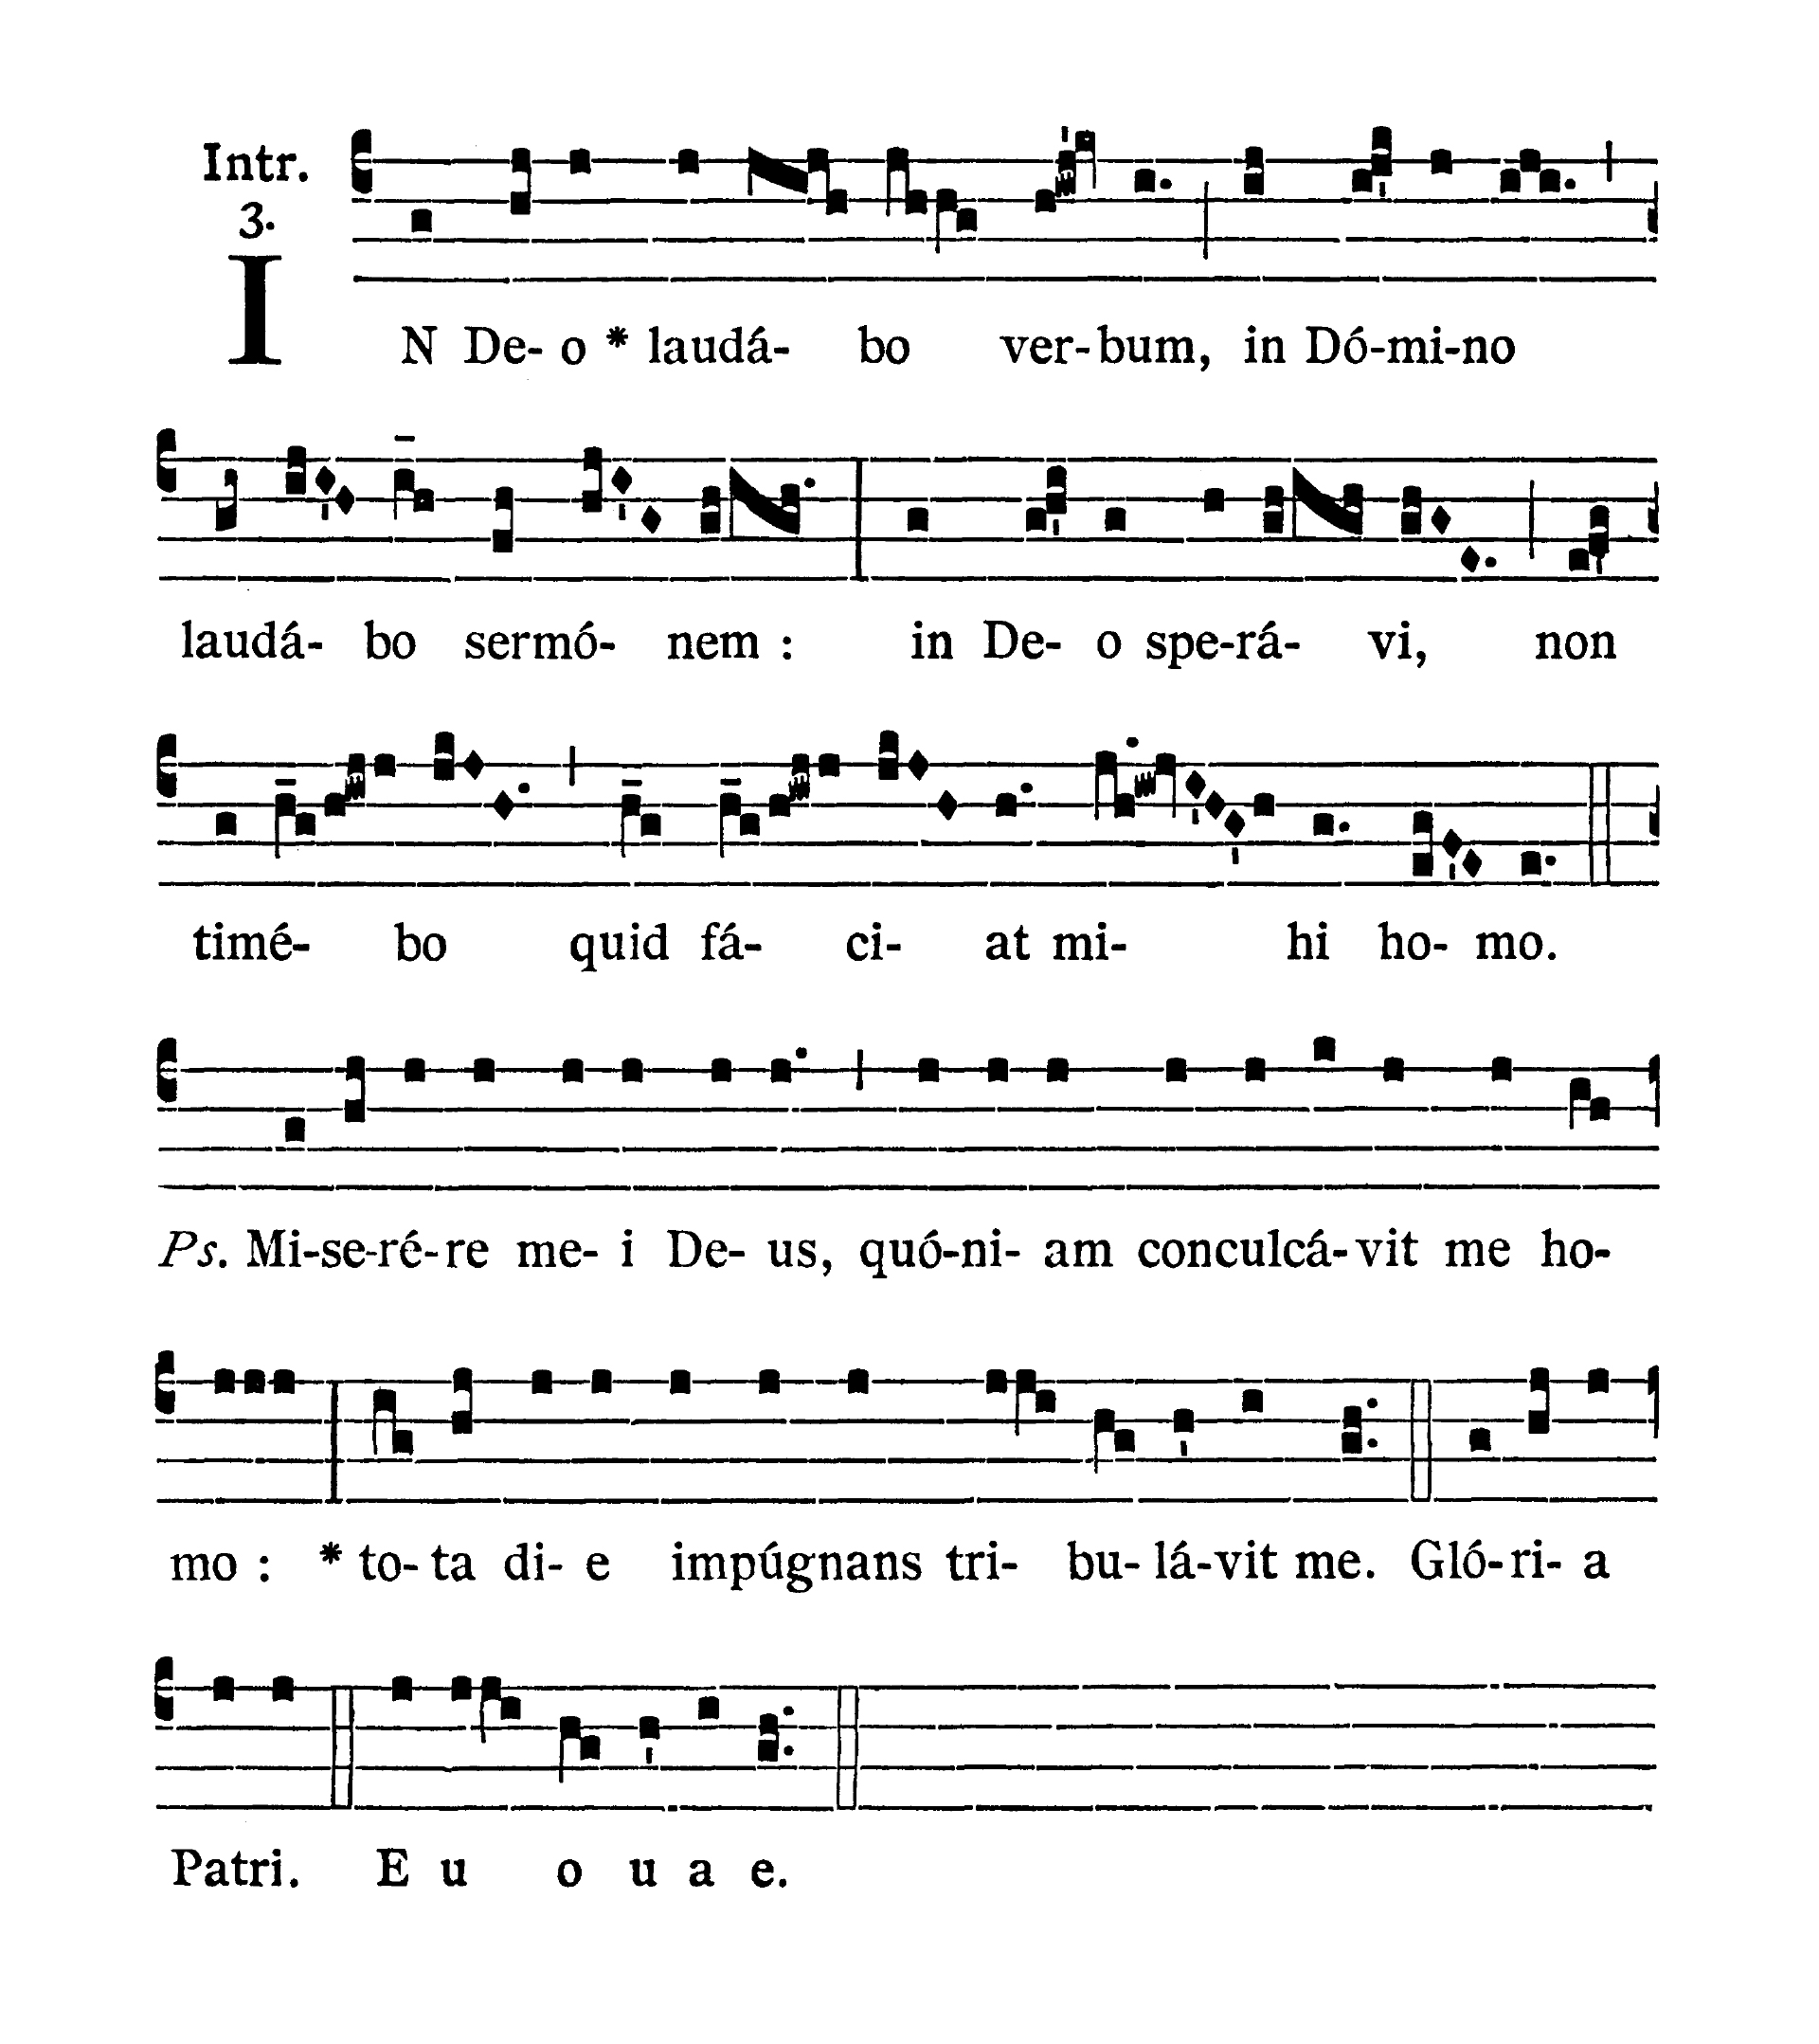 Feria II post Dominicam III Quadragesimae (Monday after Third Sunday of Lent) - Introitus (In Deo laudabo)